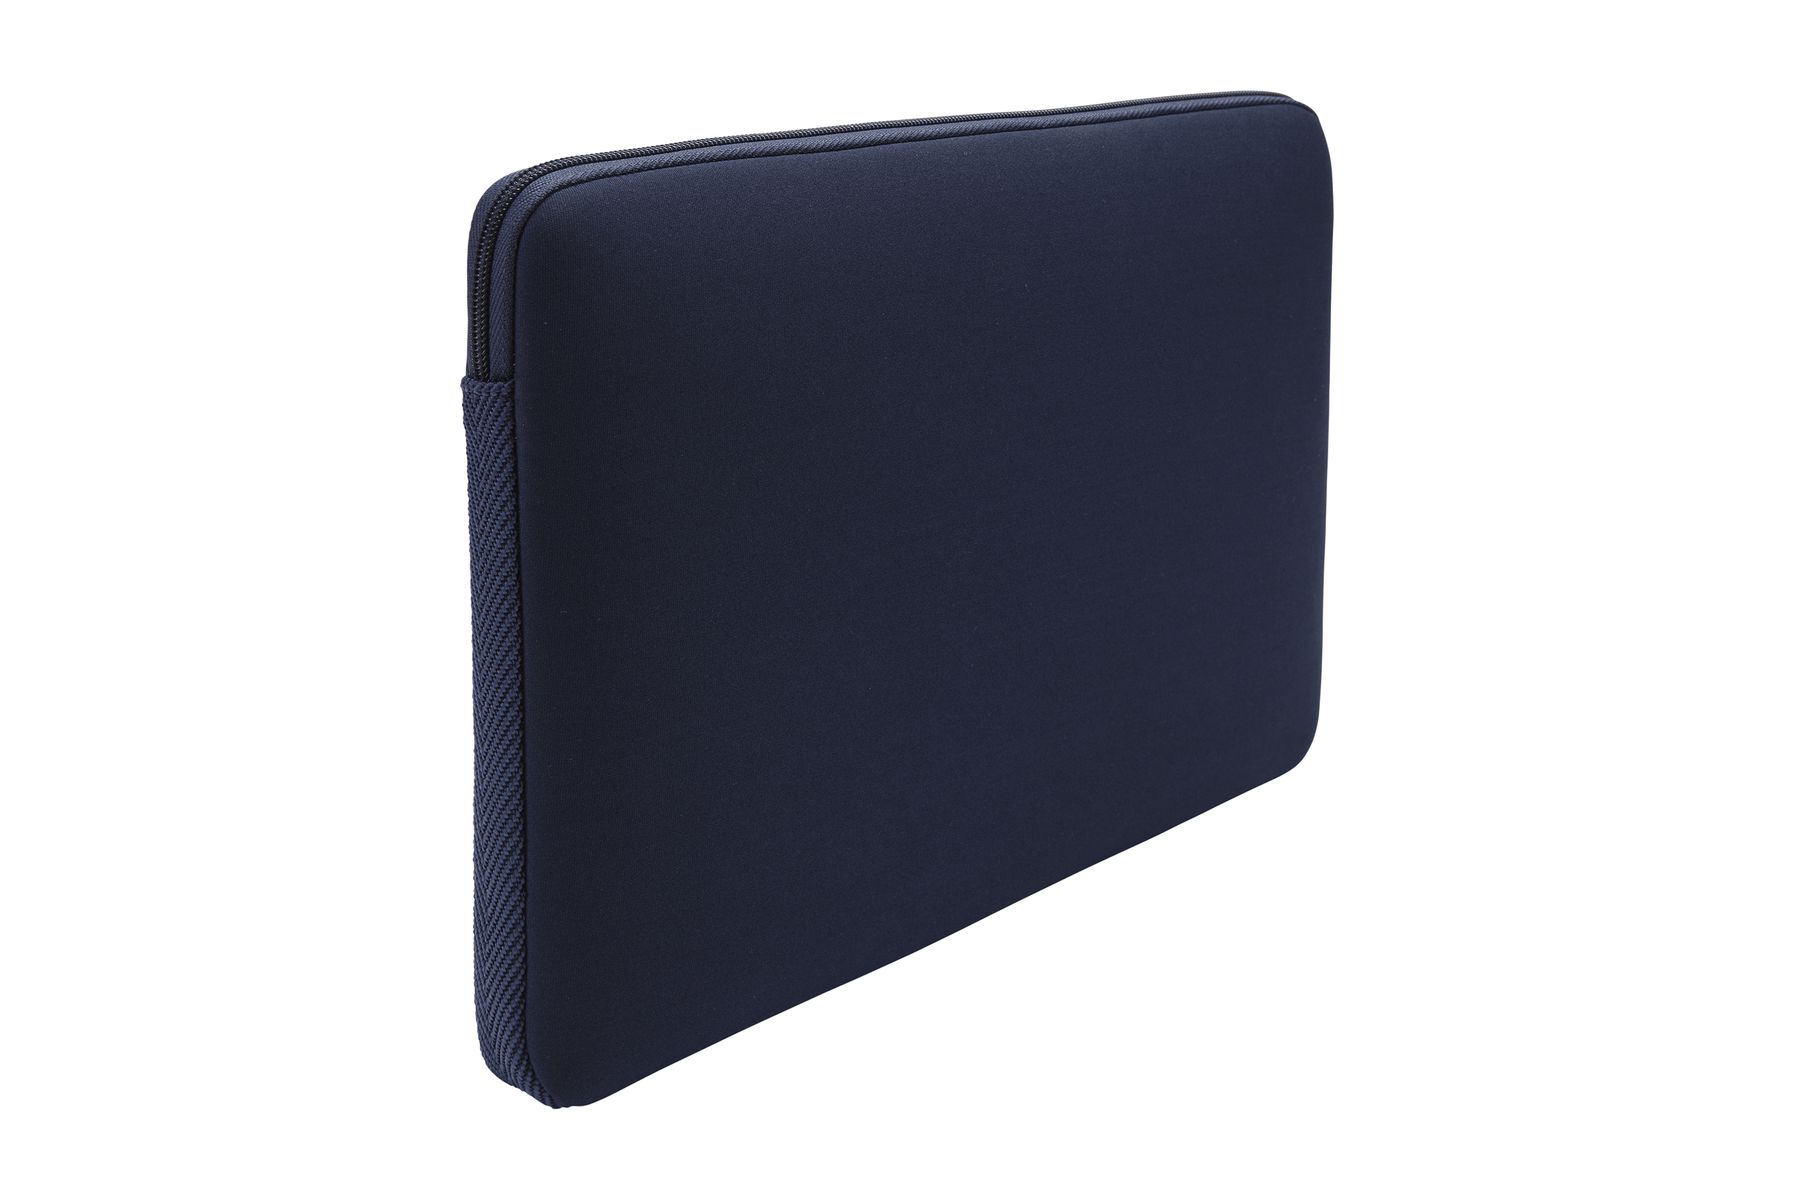 Case Logic 13.3" Laptop and MacBook Sleeve Dark Blue - Back